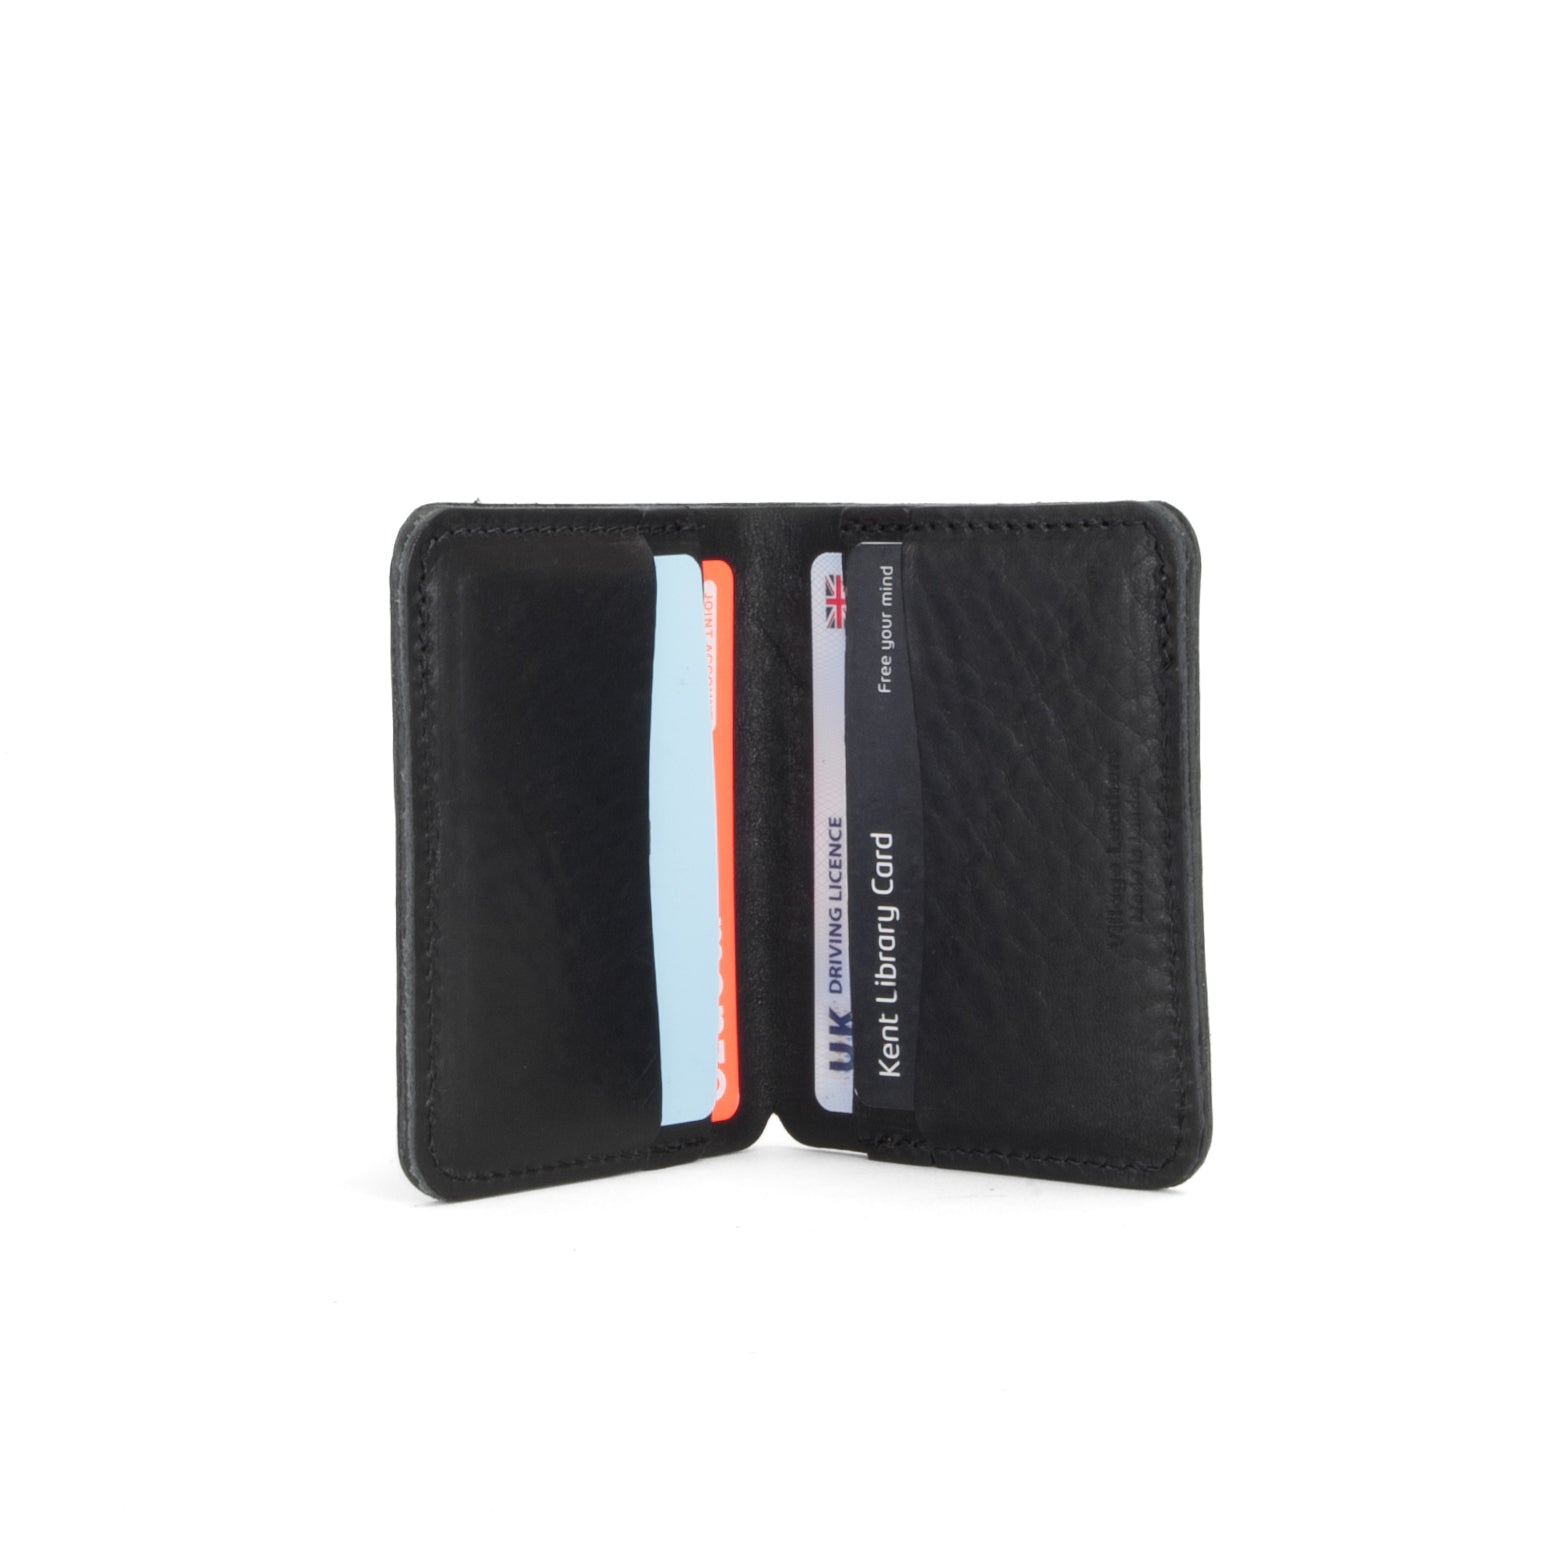 Missouri Black Leather Wallet